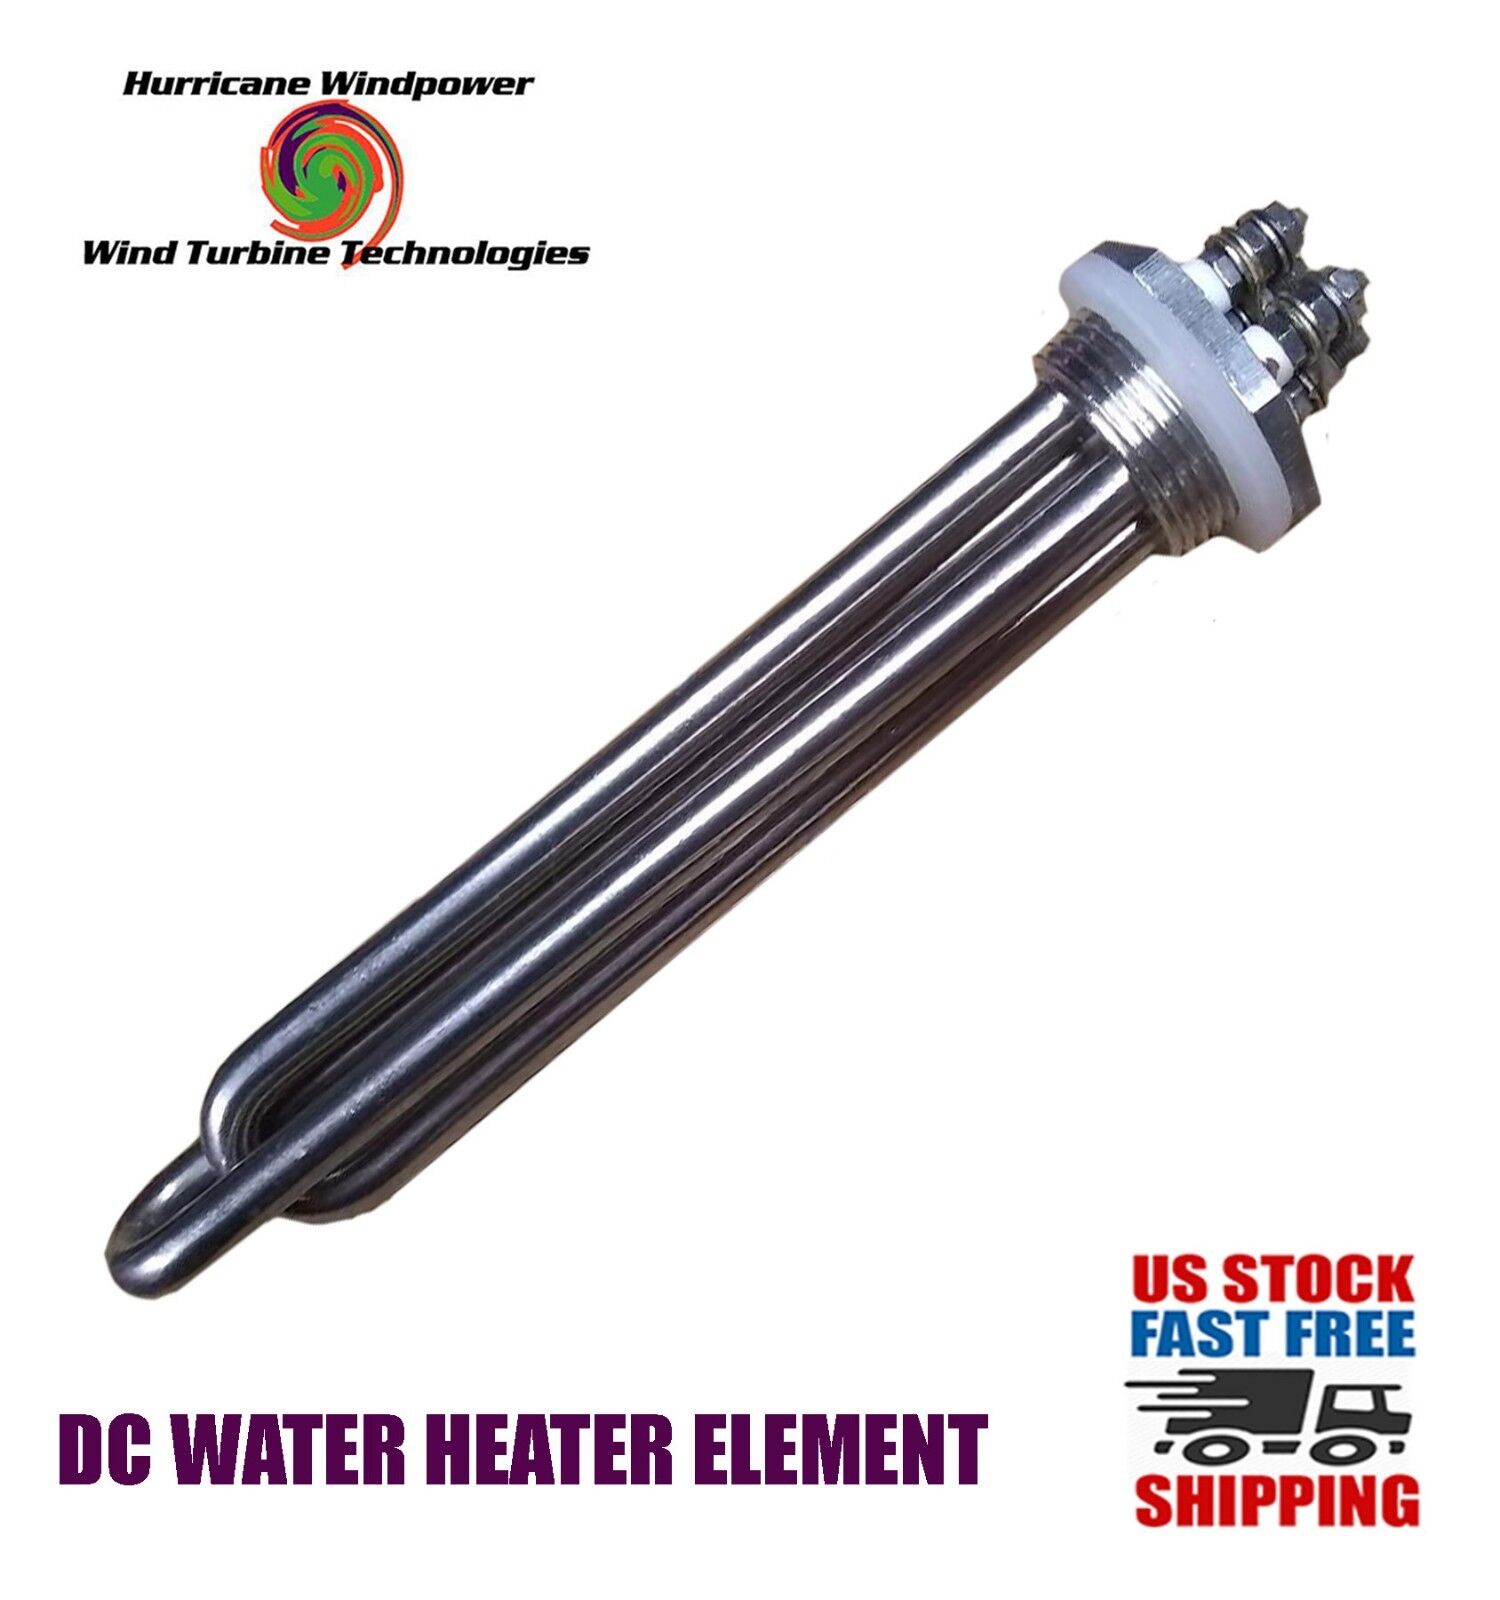 DC Water Heater Element 12 Volt 600 Watt for Wind Generator Turbine Solar Energy